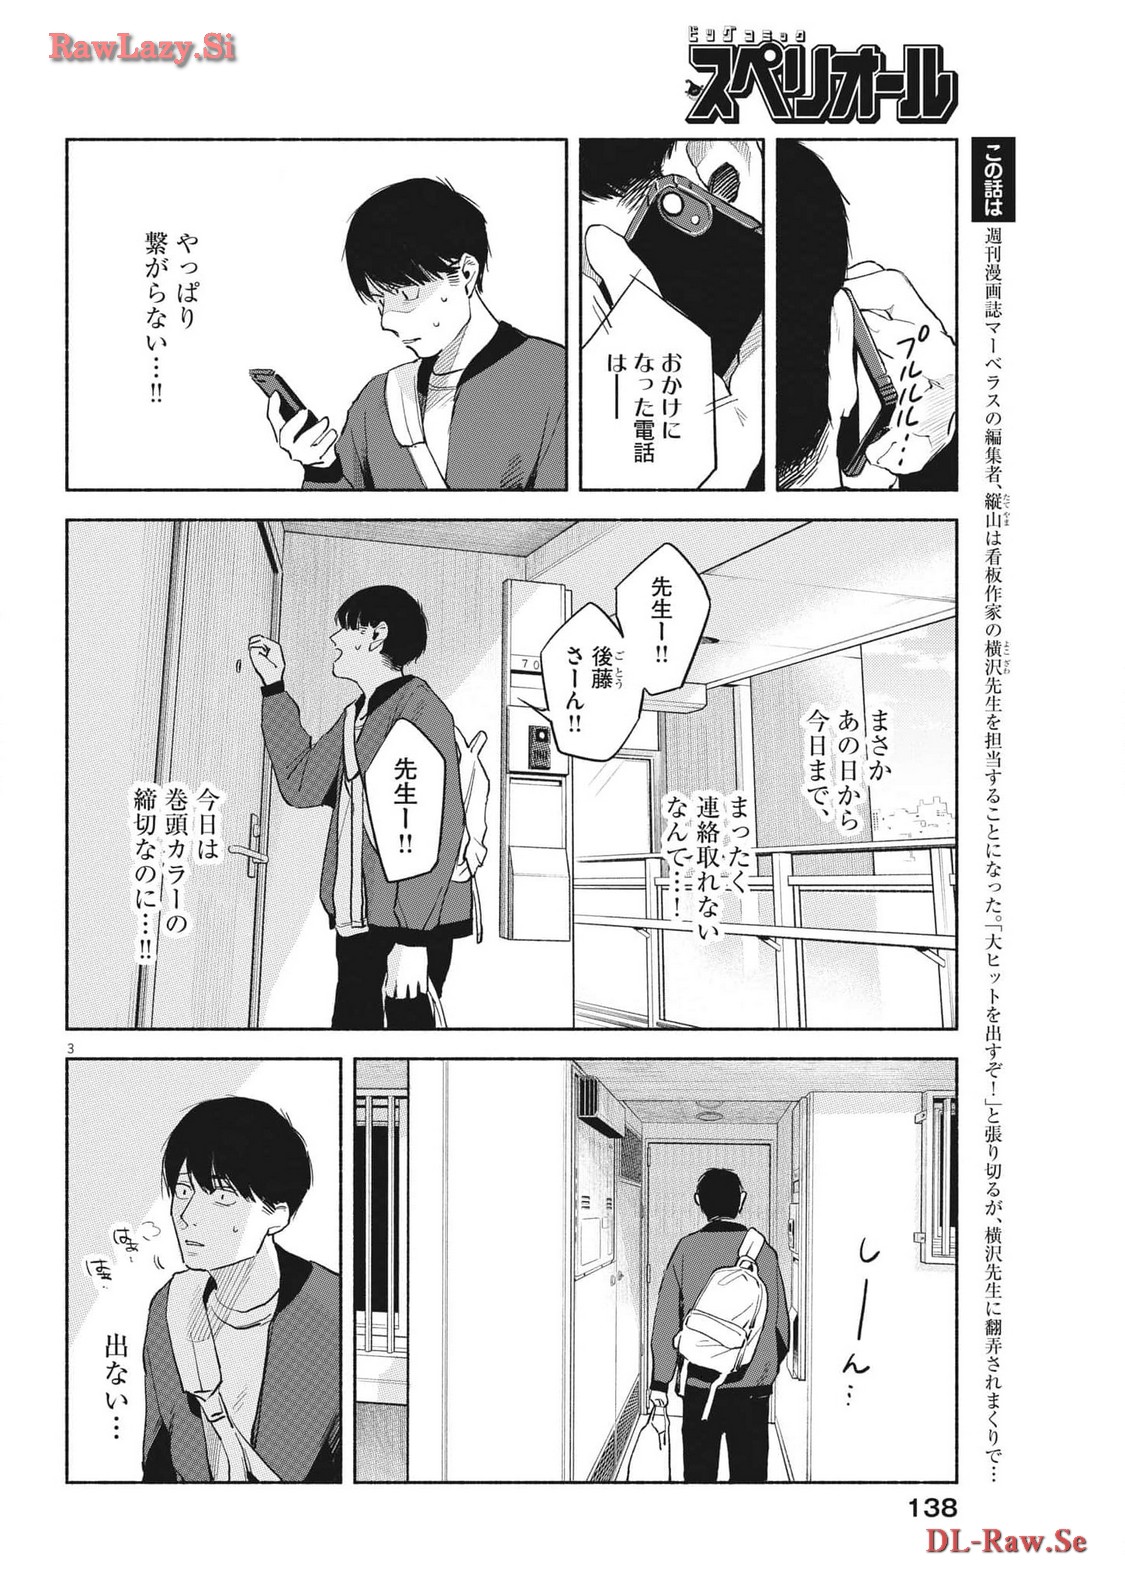 Henshuu no Isshou - Chapter 20 - Page 3